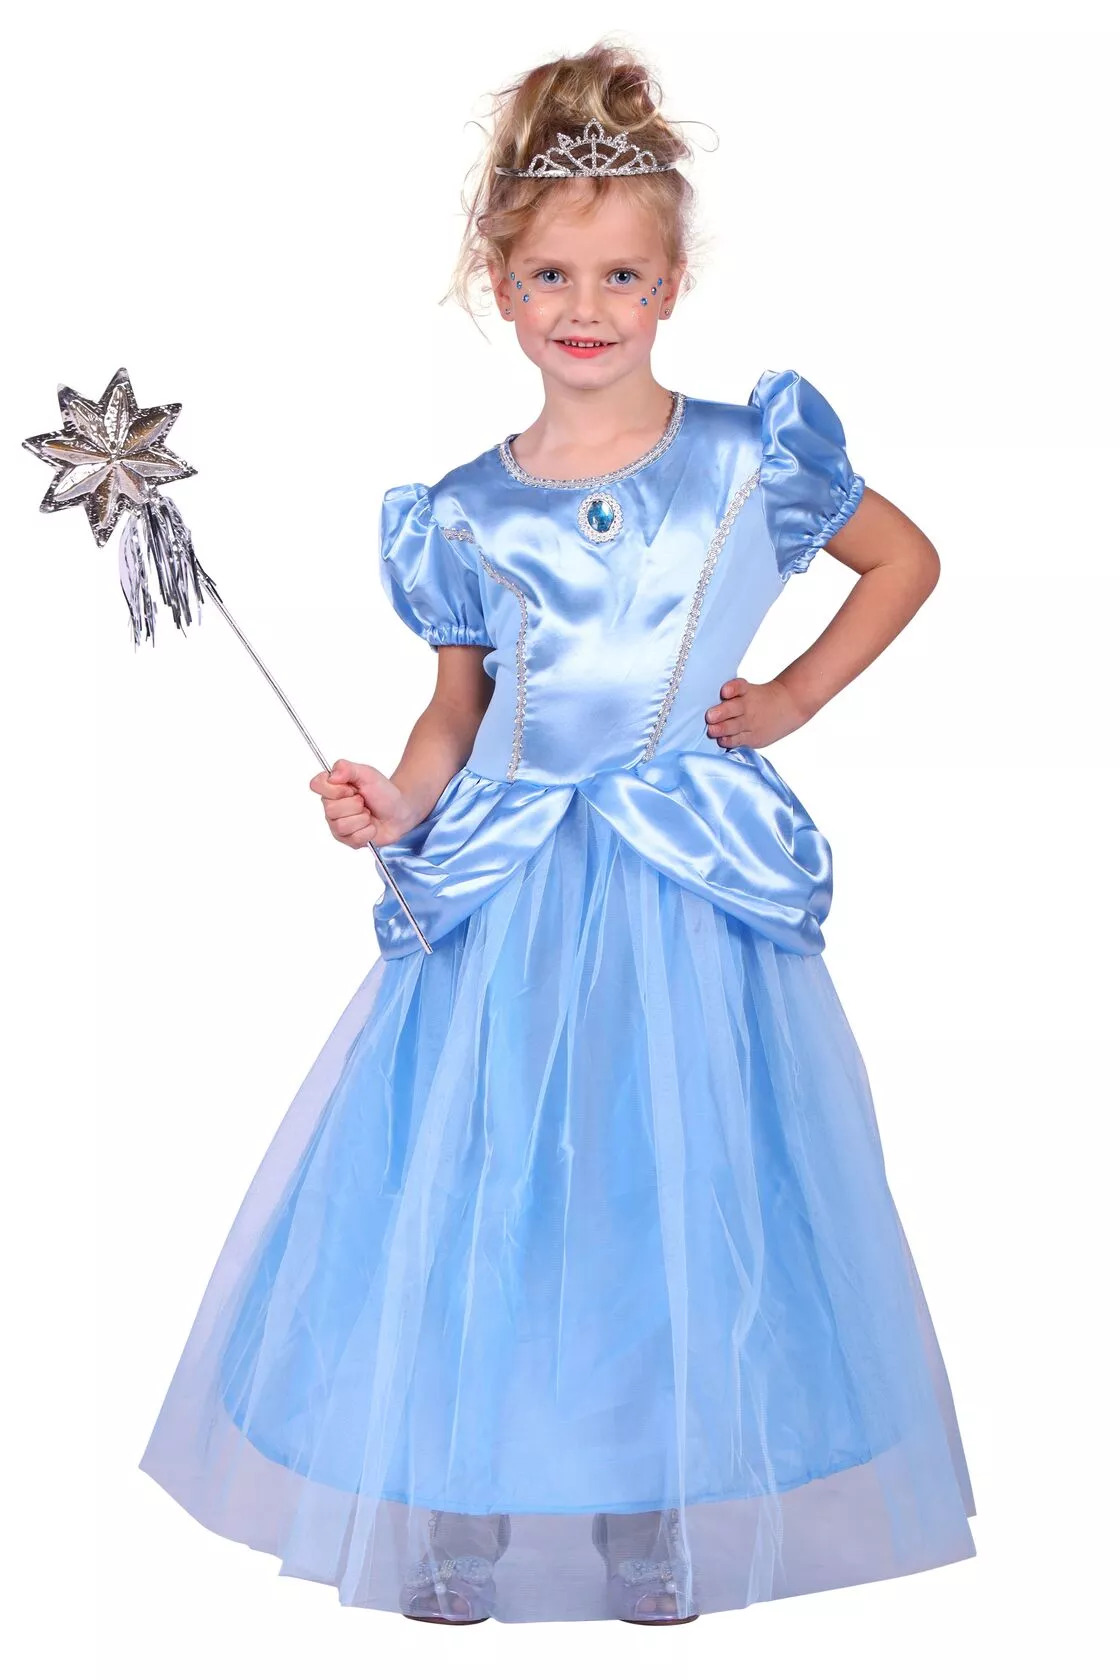 cijfer Chemicus Stun Kostuum Prinses "Royal" Blauw Kind - Feesthuis